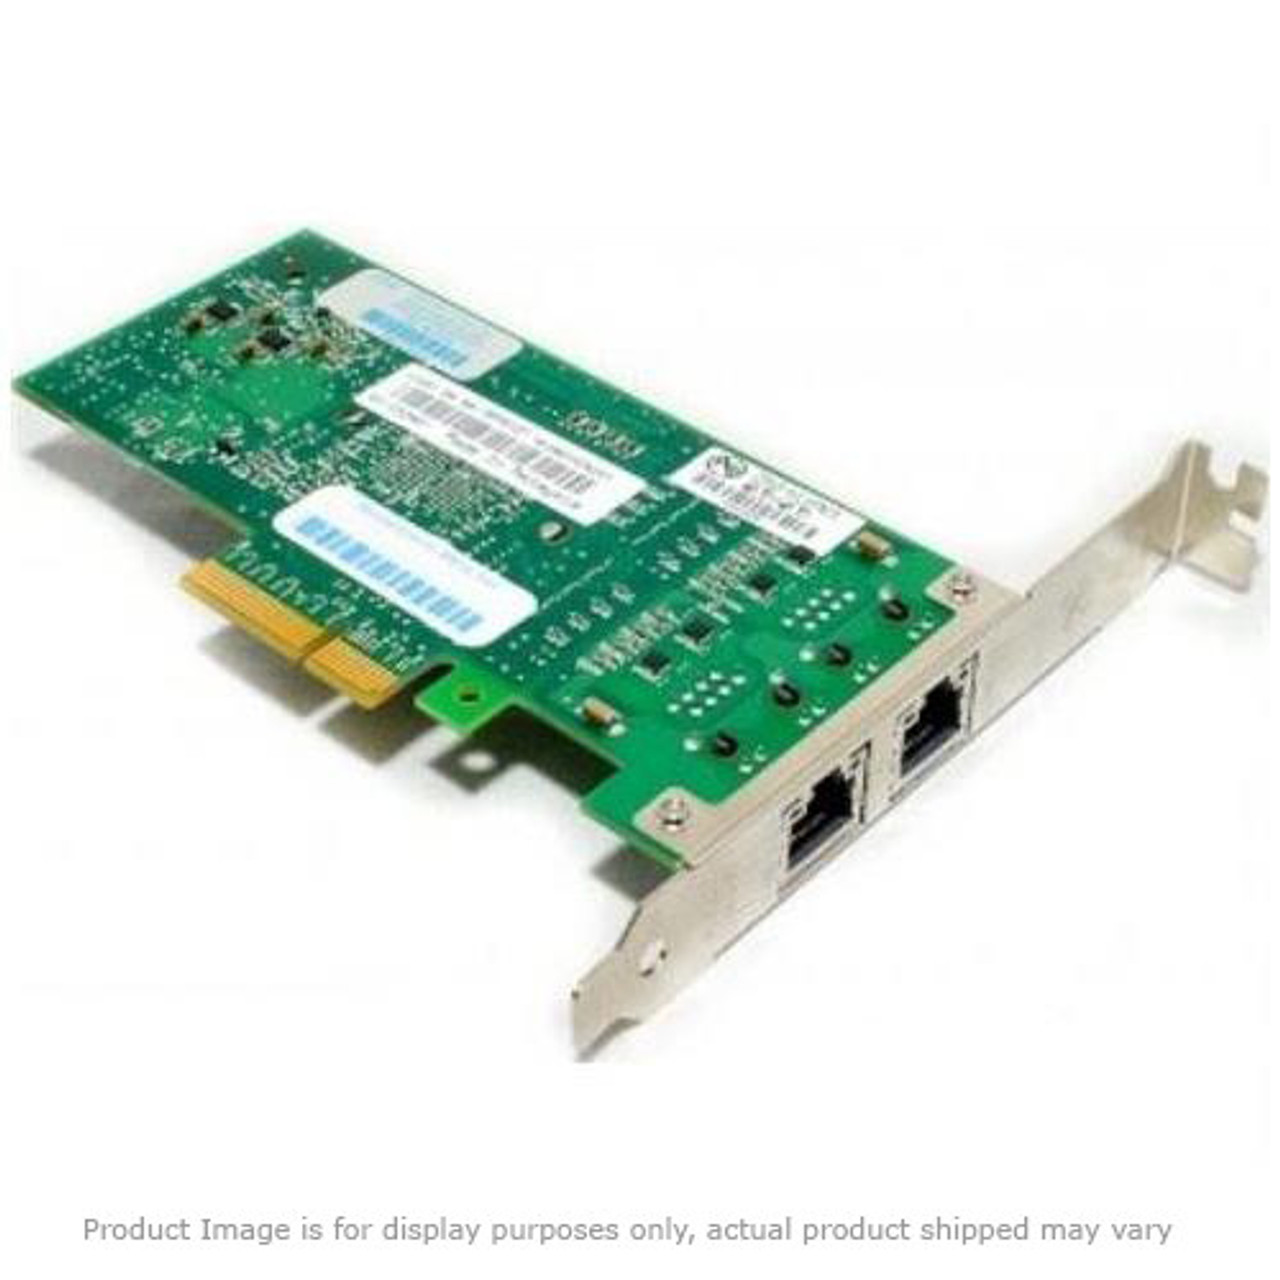 PEX10GSFP StarTech.com 10G PCIe SFP+ Card, Single SFP+ Port Network Adapter, Open SFP+ for MSA-Compliant Modules/Cables, 10 Gigabit PCIe NIC Card - Up to 10